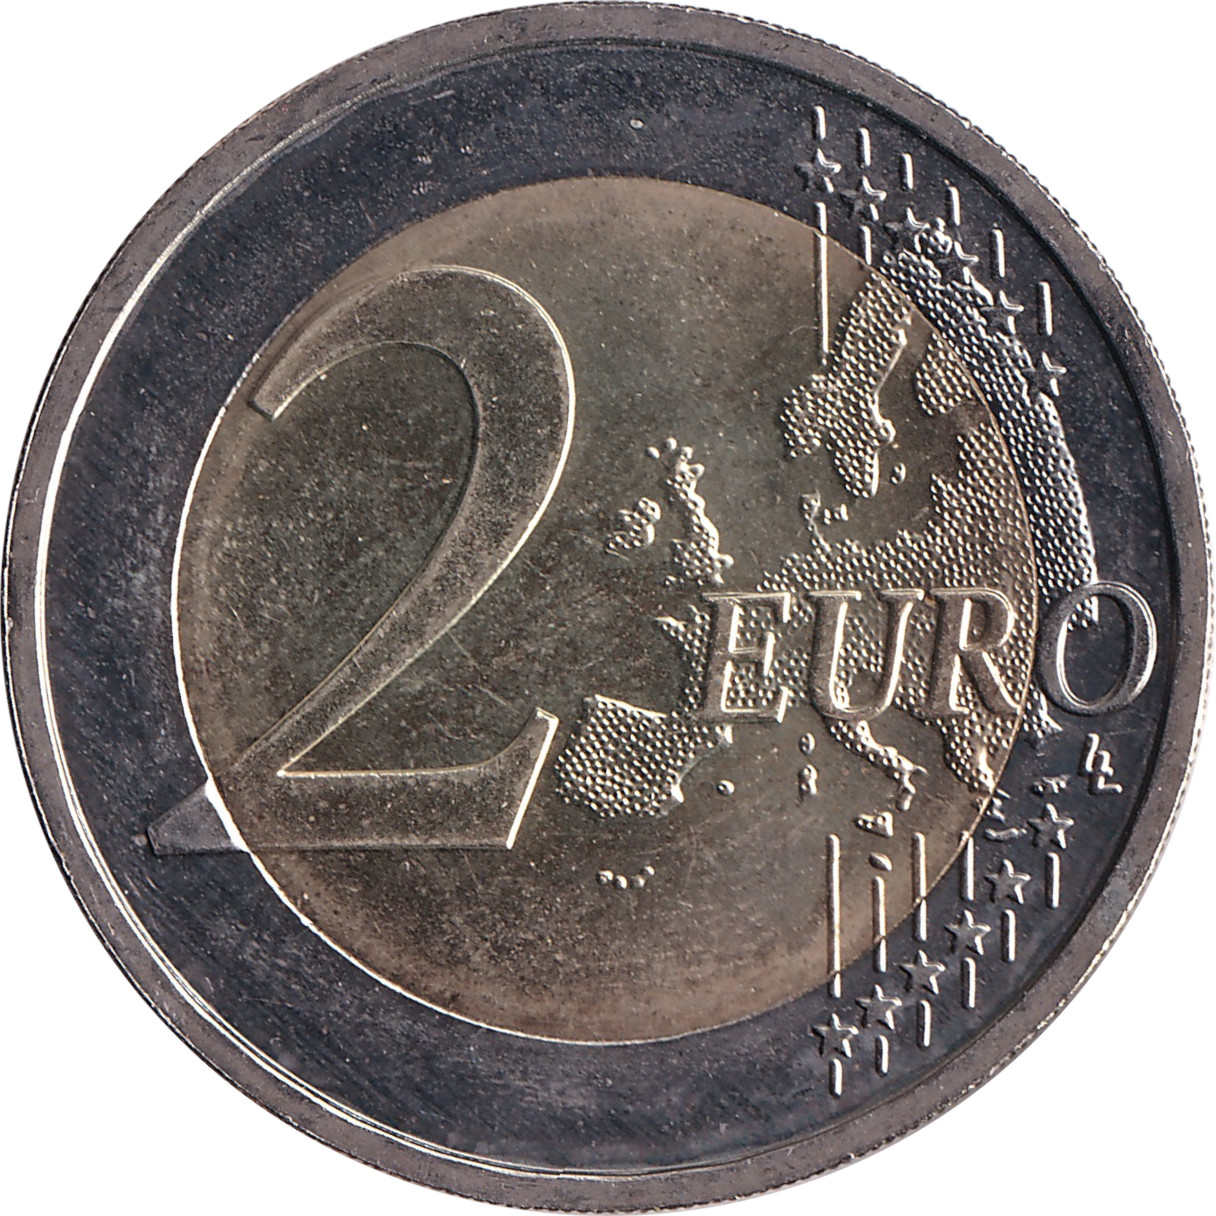 2 euro - Low Saxony